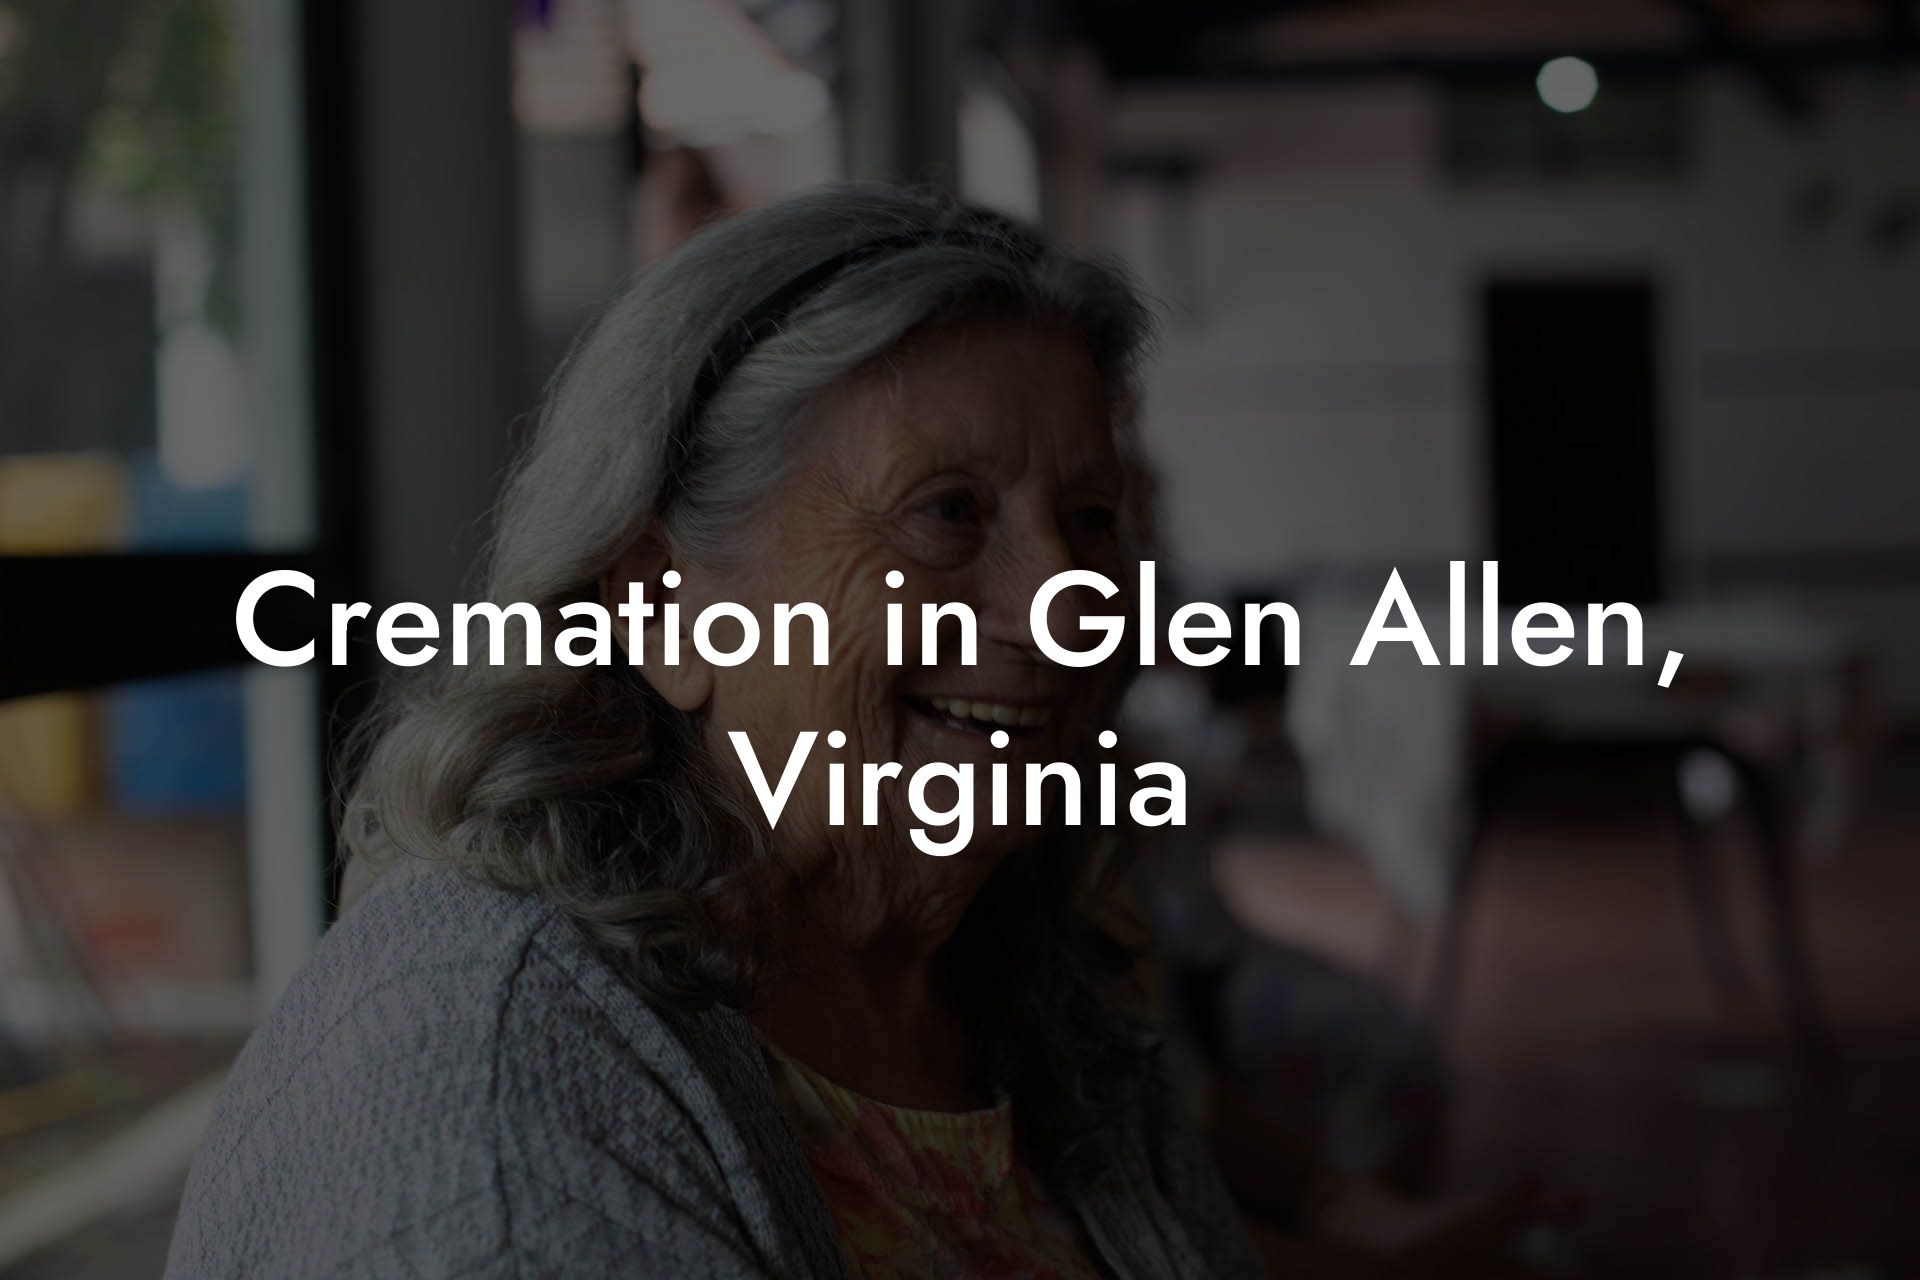 Cremation in Glen Allen, Virginia